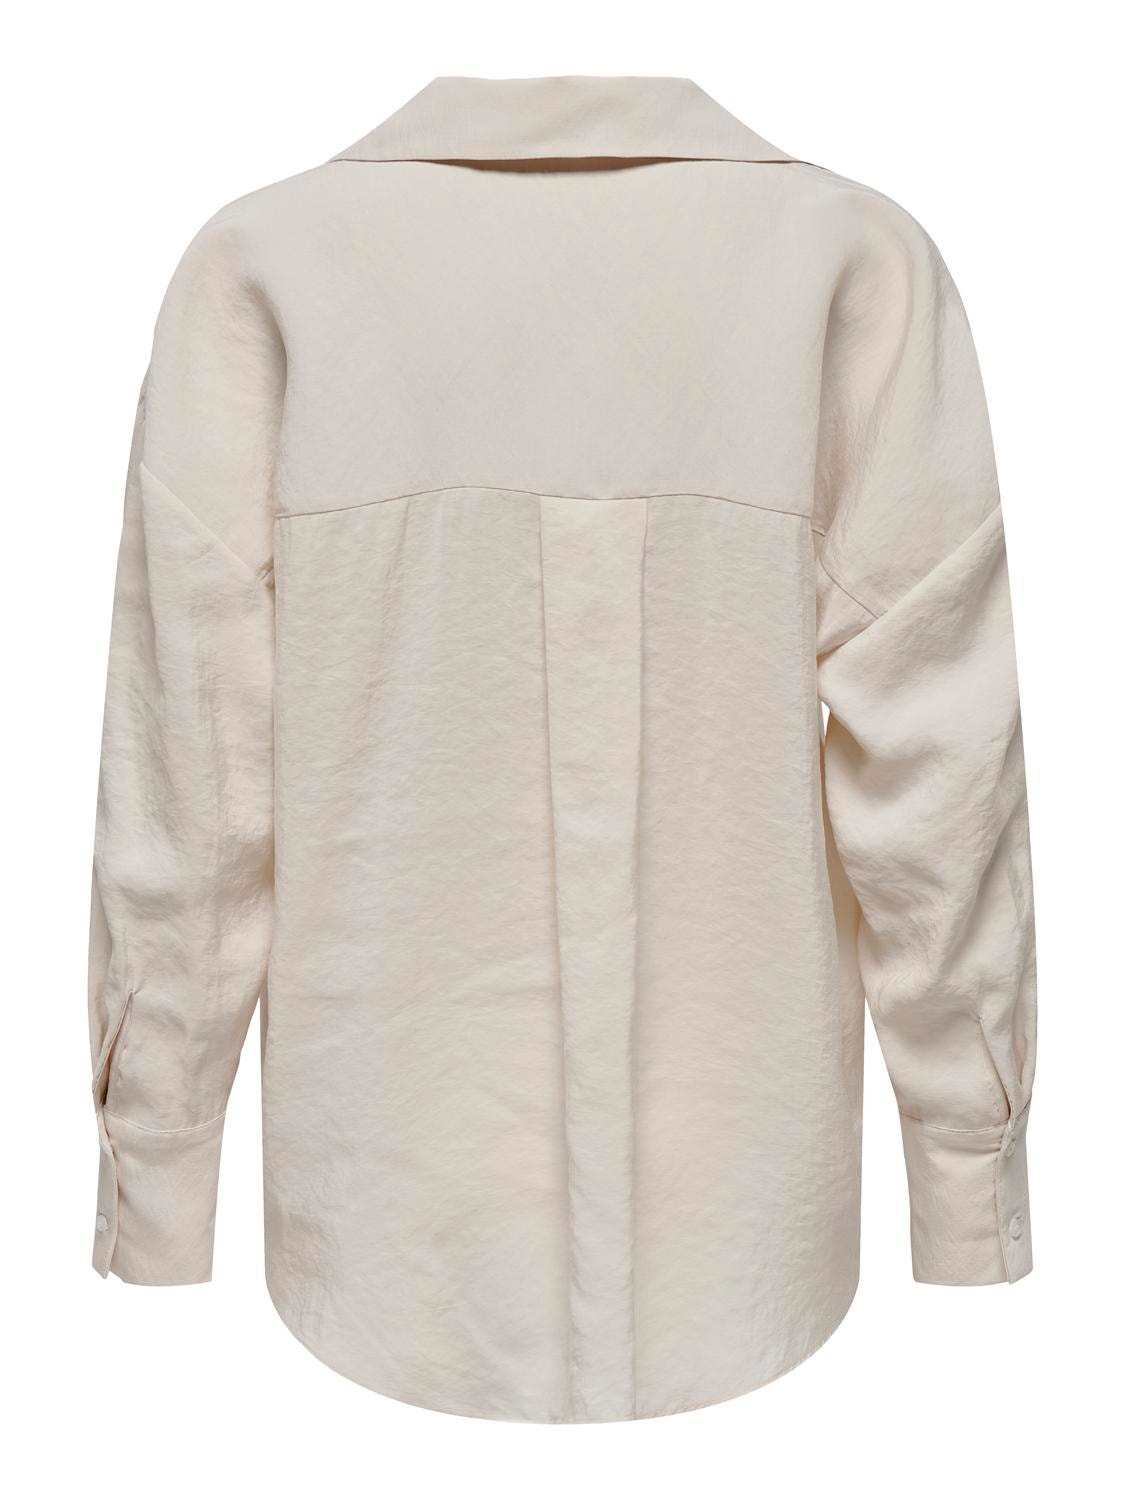 ONLY Camisas Corte oversized Cuello de camisa Puños abotonados Hombros caídos -Antique White - 15272523